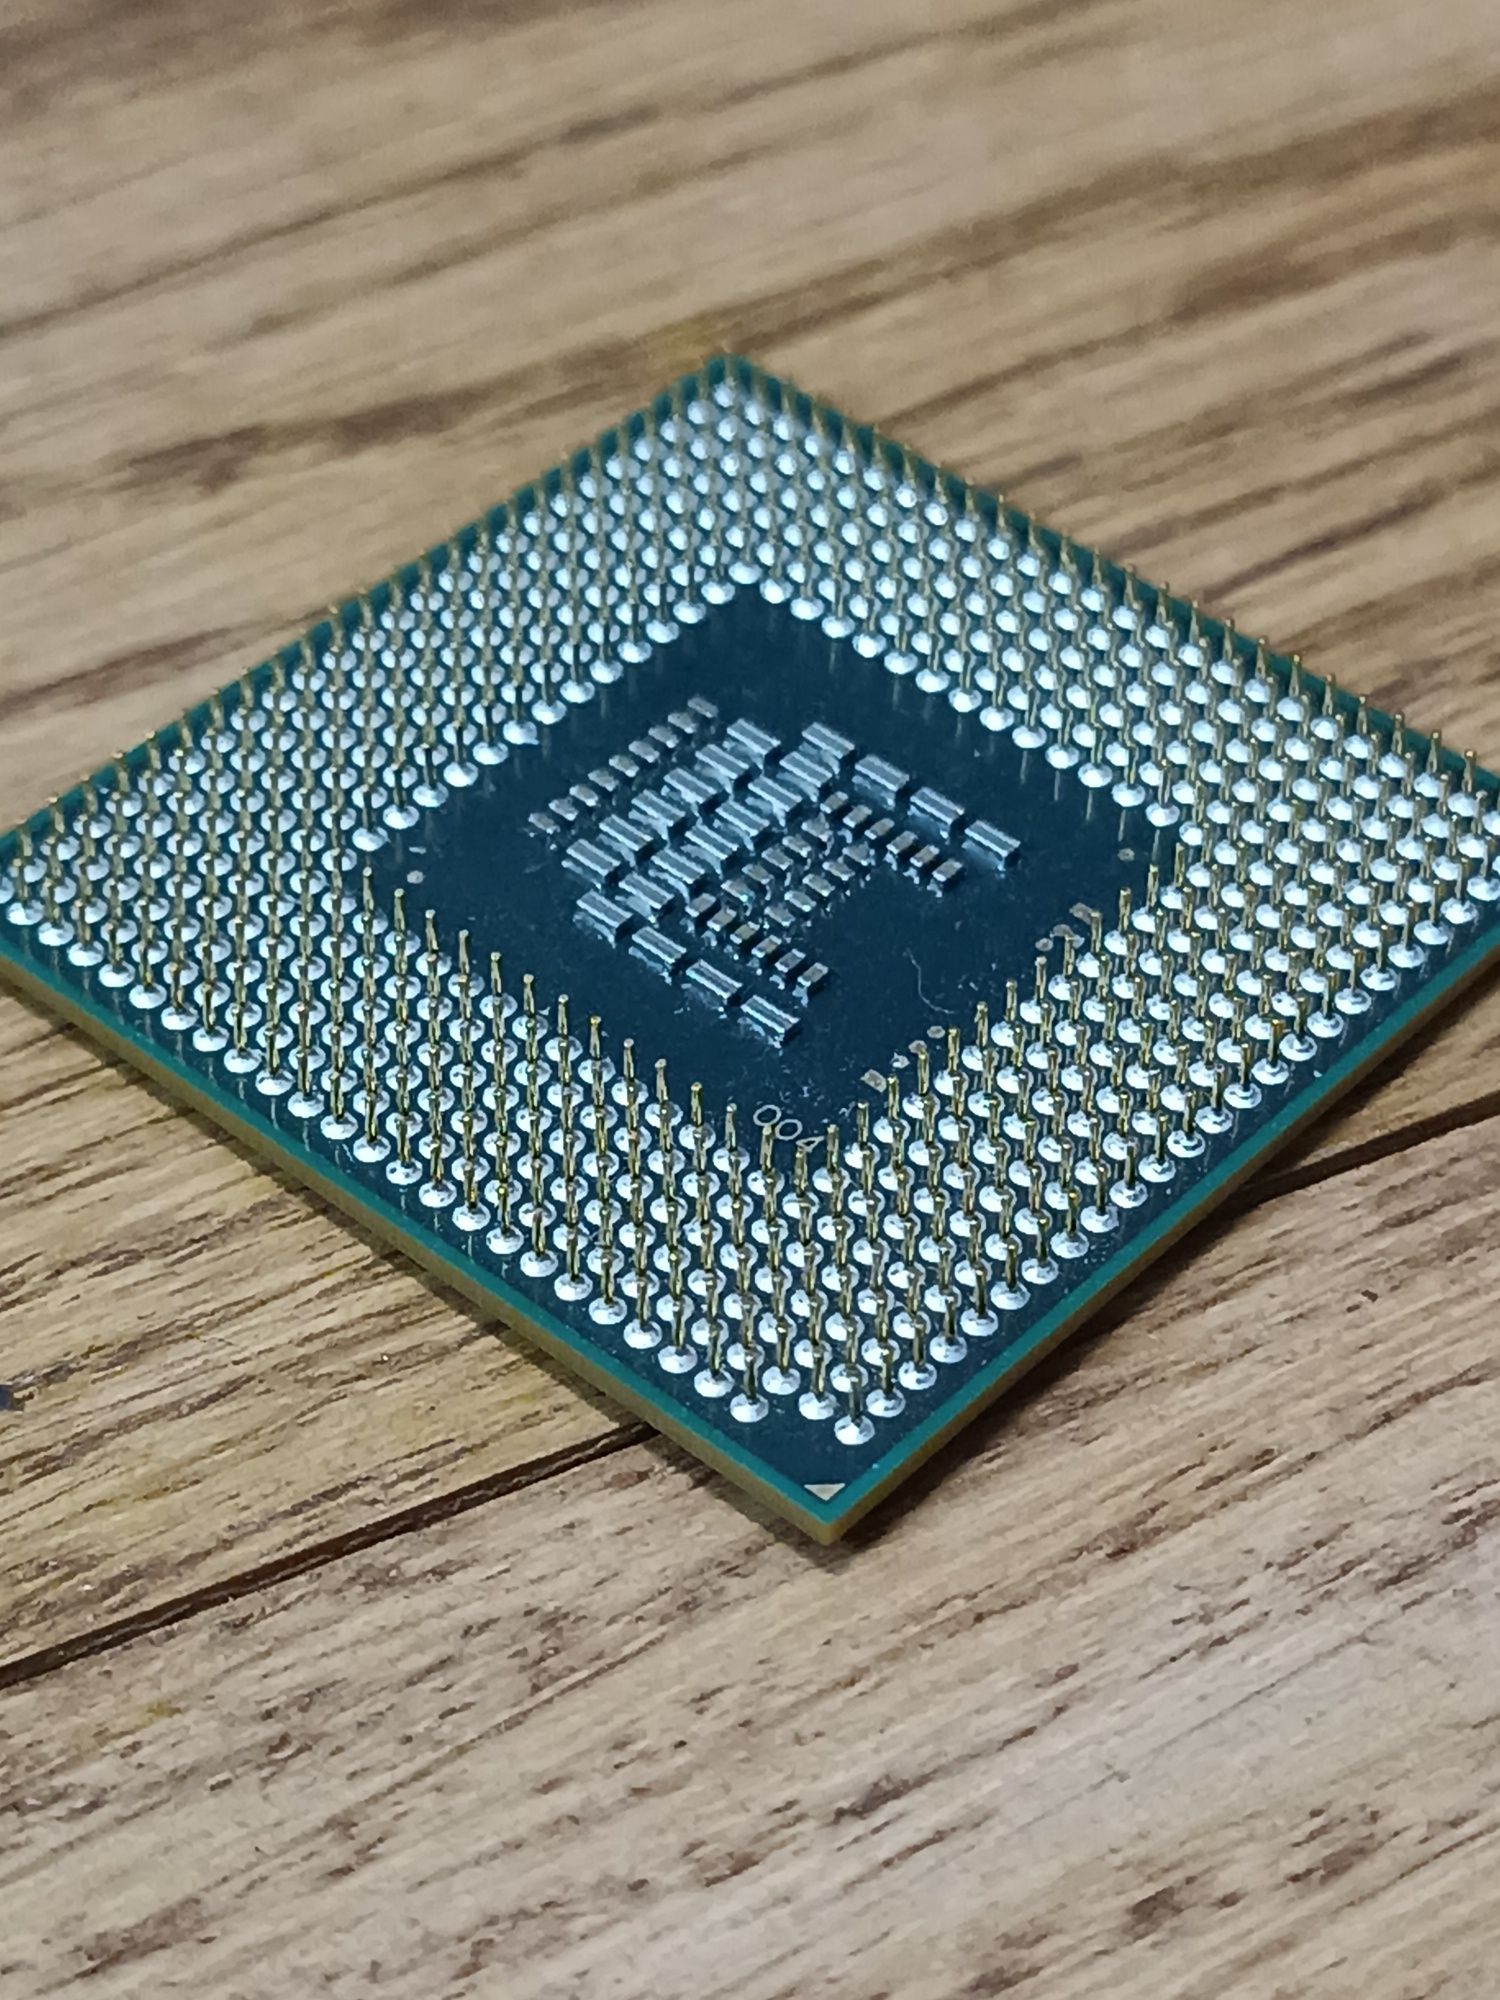 Б\У Процесор Intel Celeron T3500, SLGJV